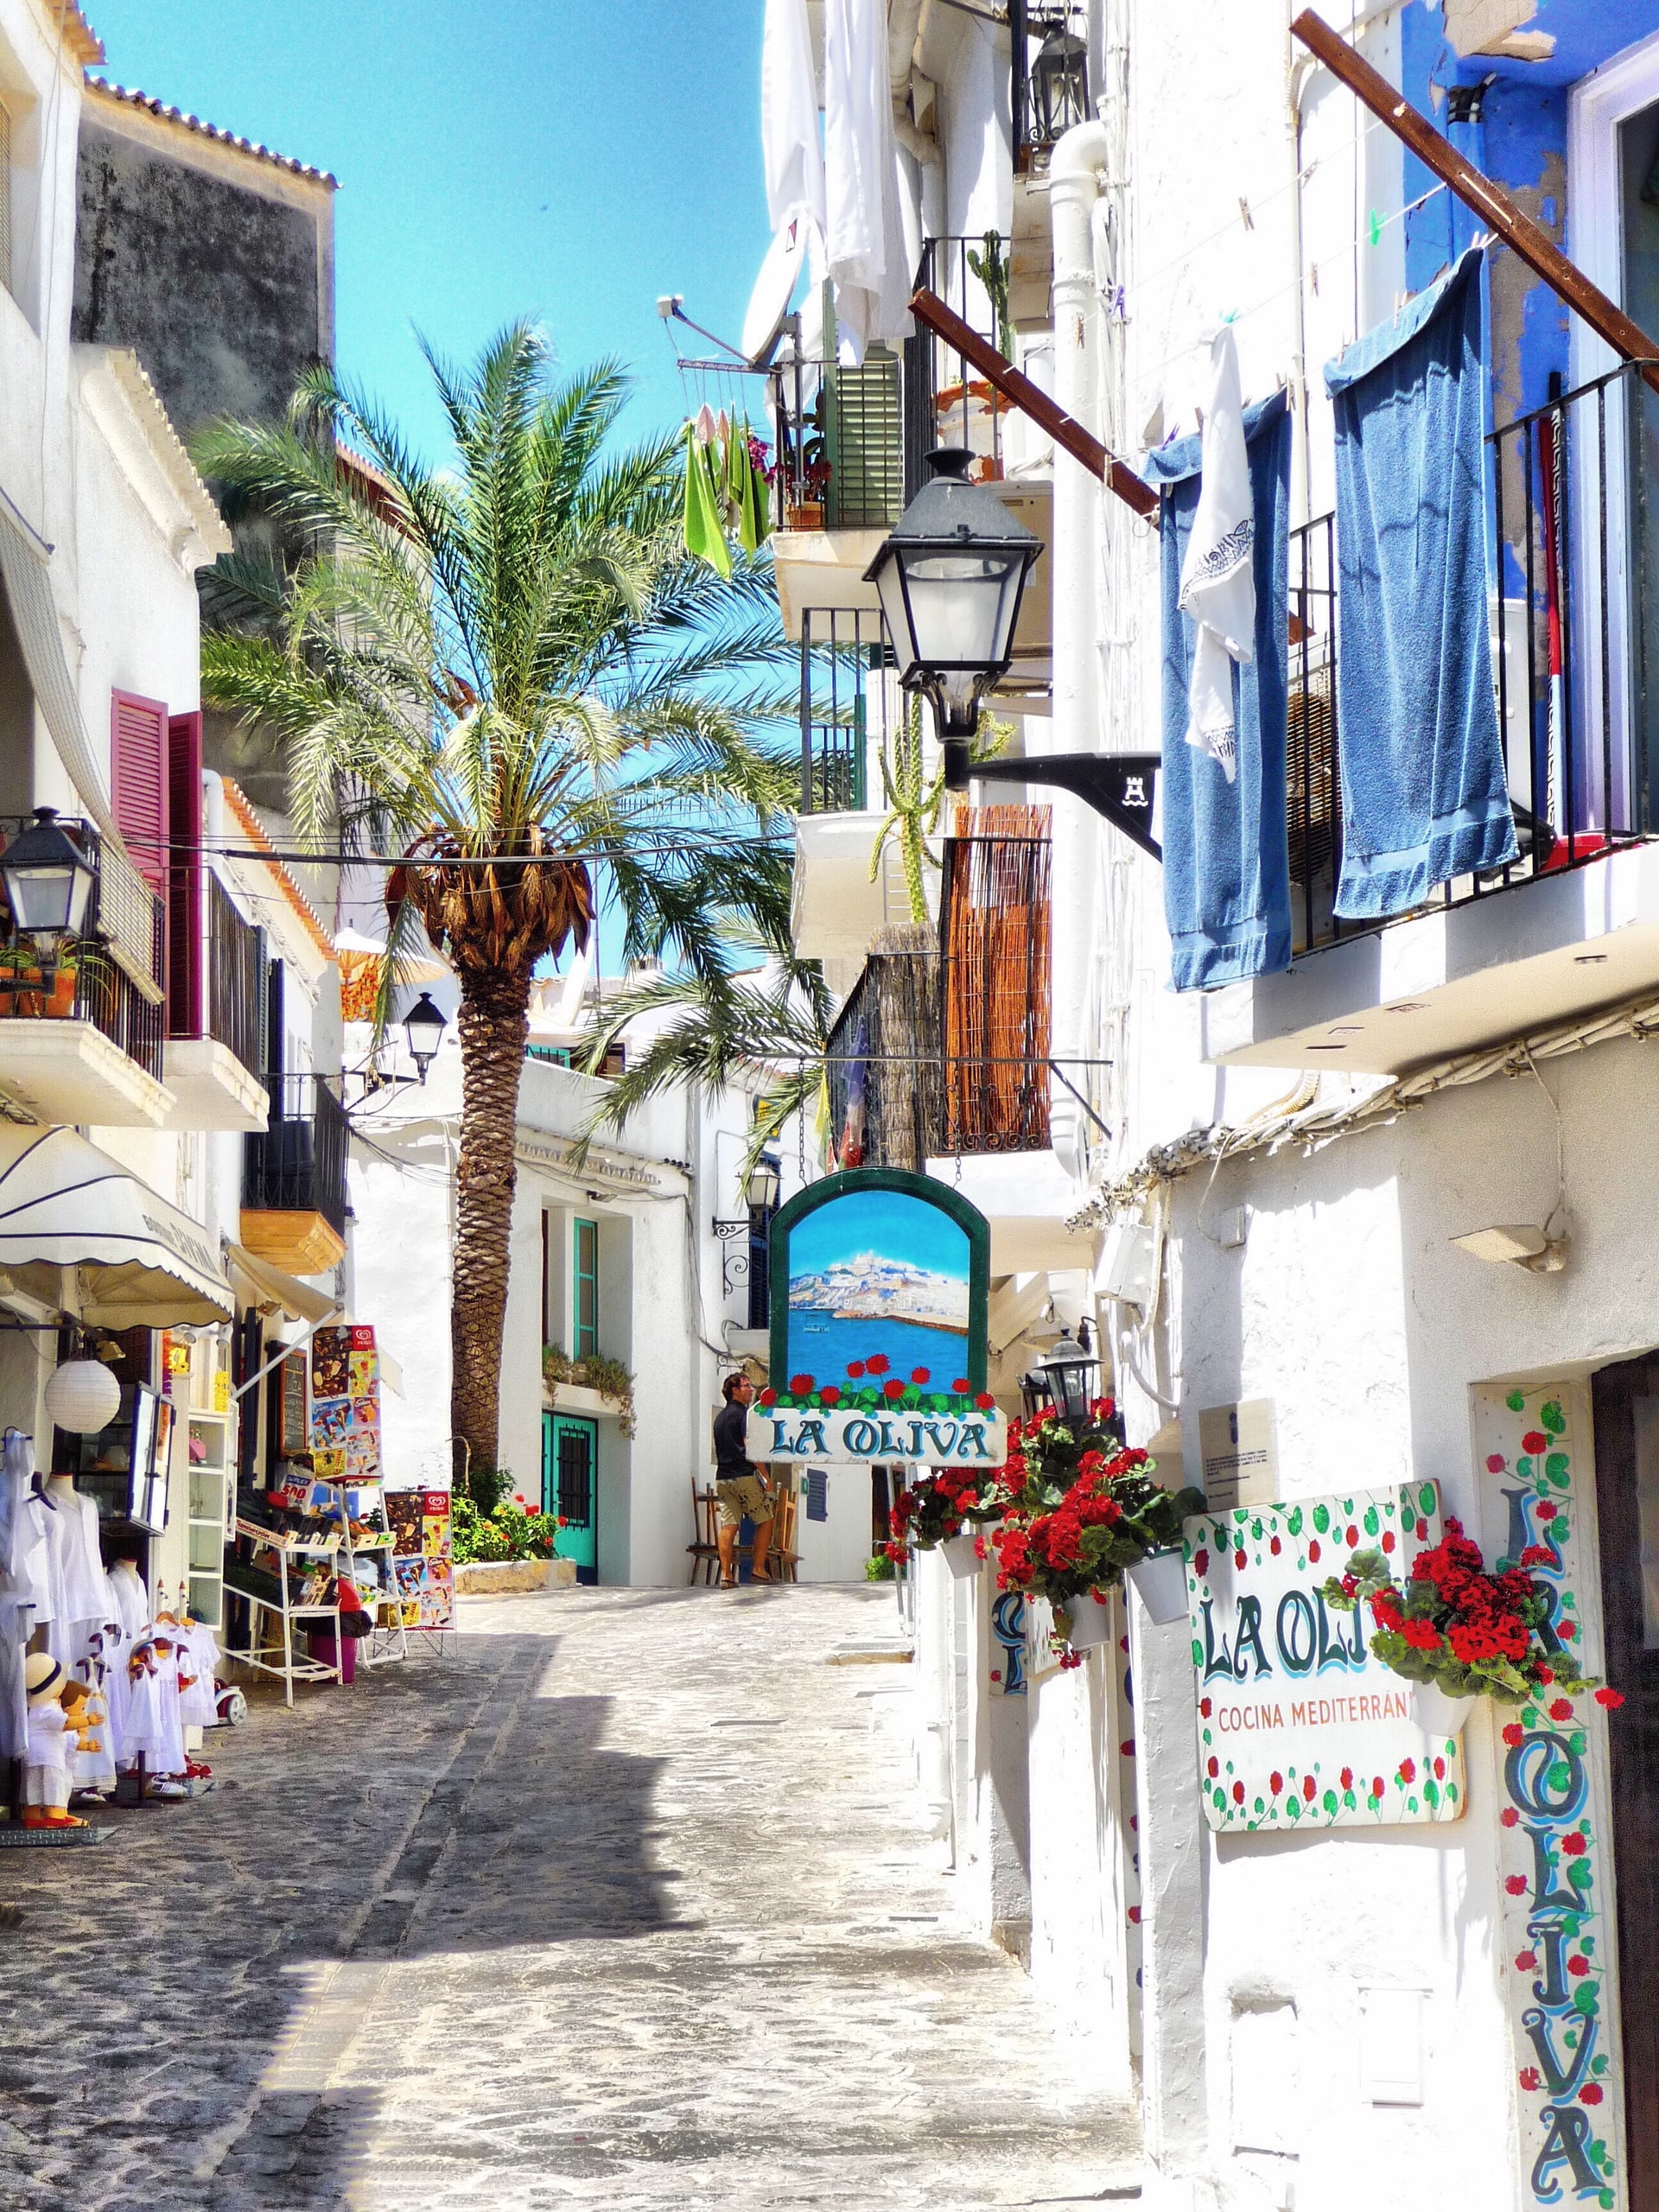 The streets of Ibiza.